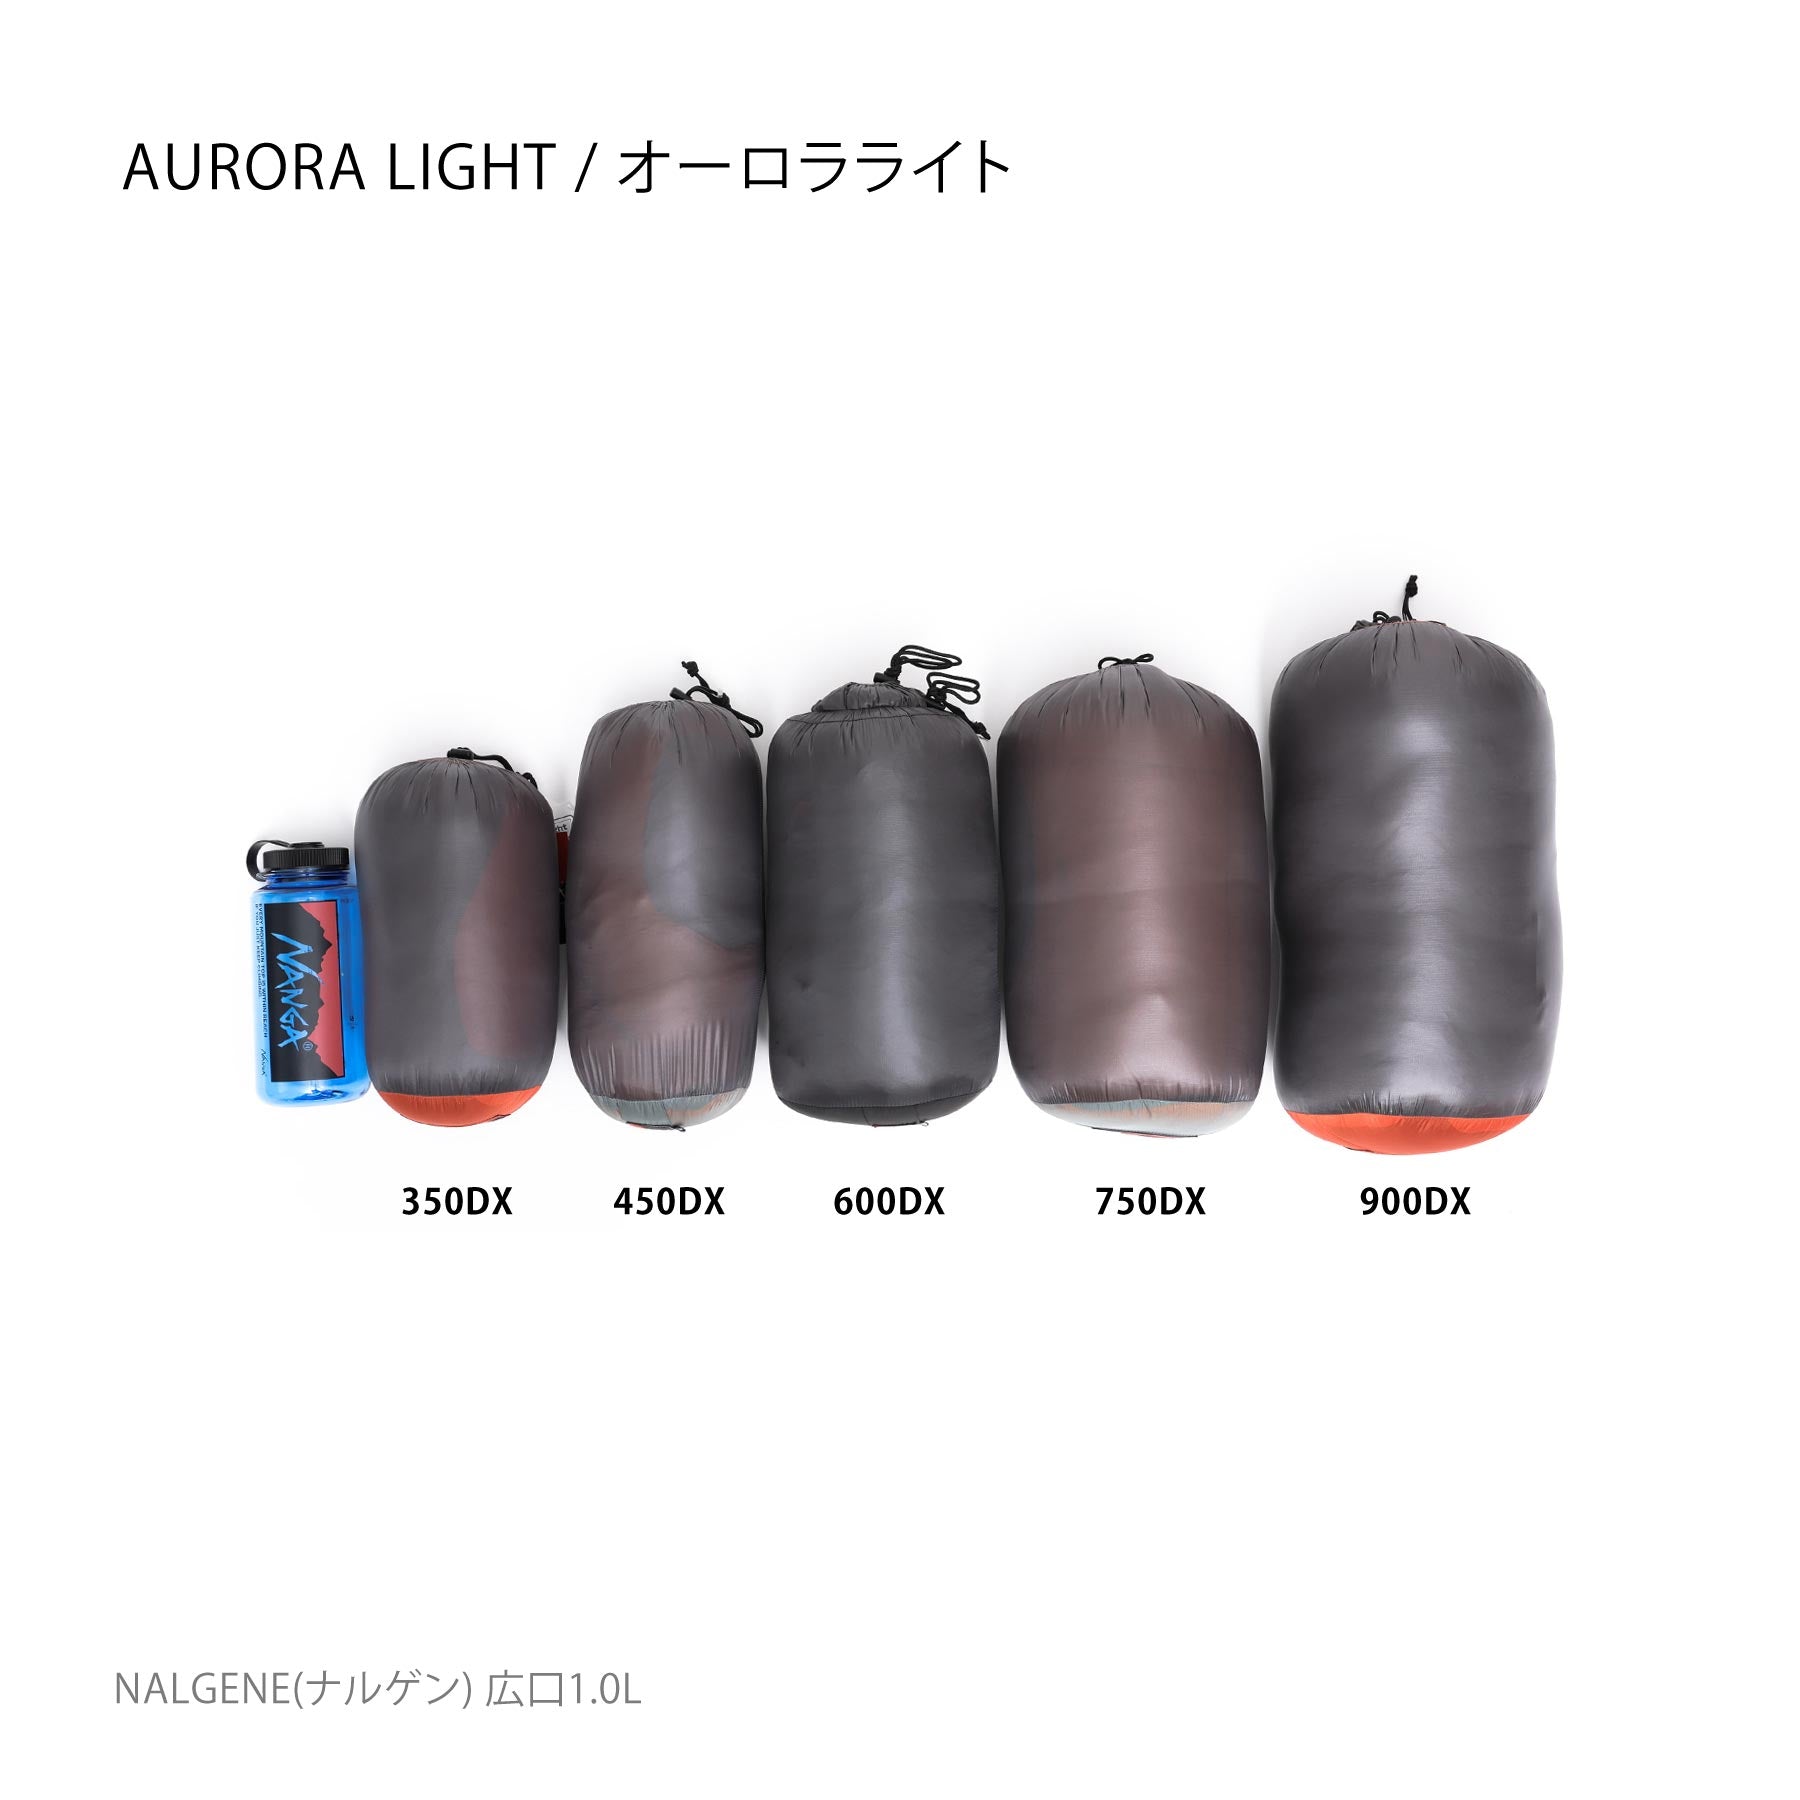 AURORA light 750 DX / オーロラライト750DX – NANGA ONLINE SHOP